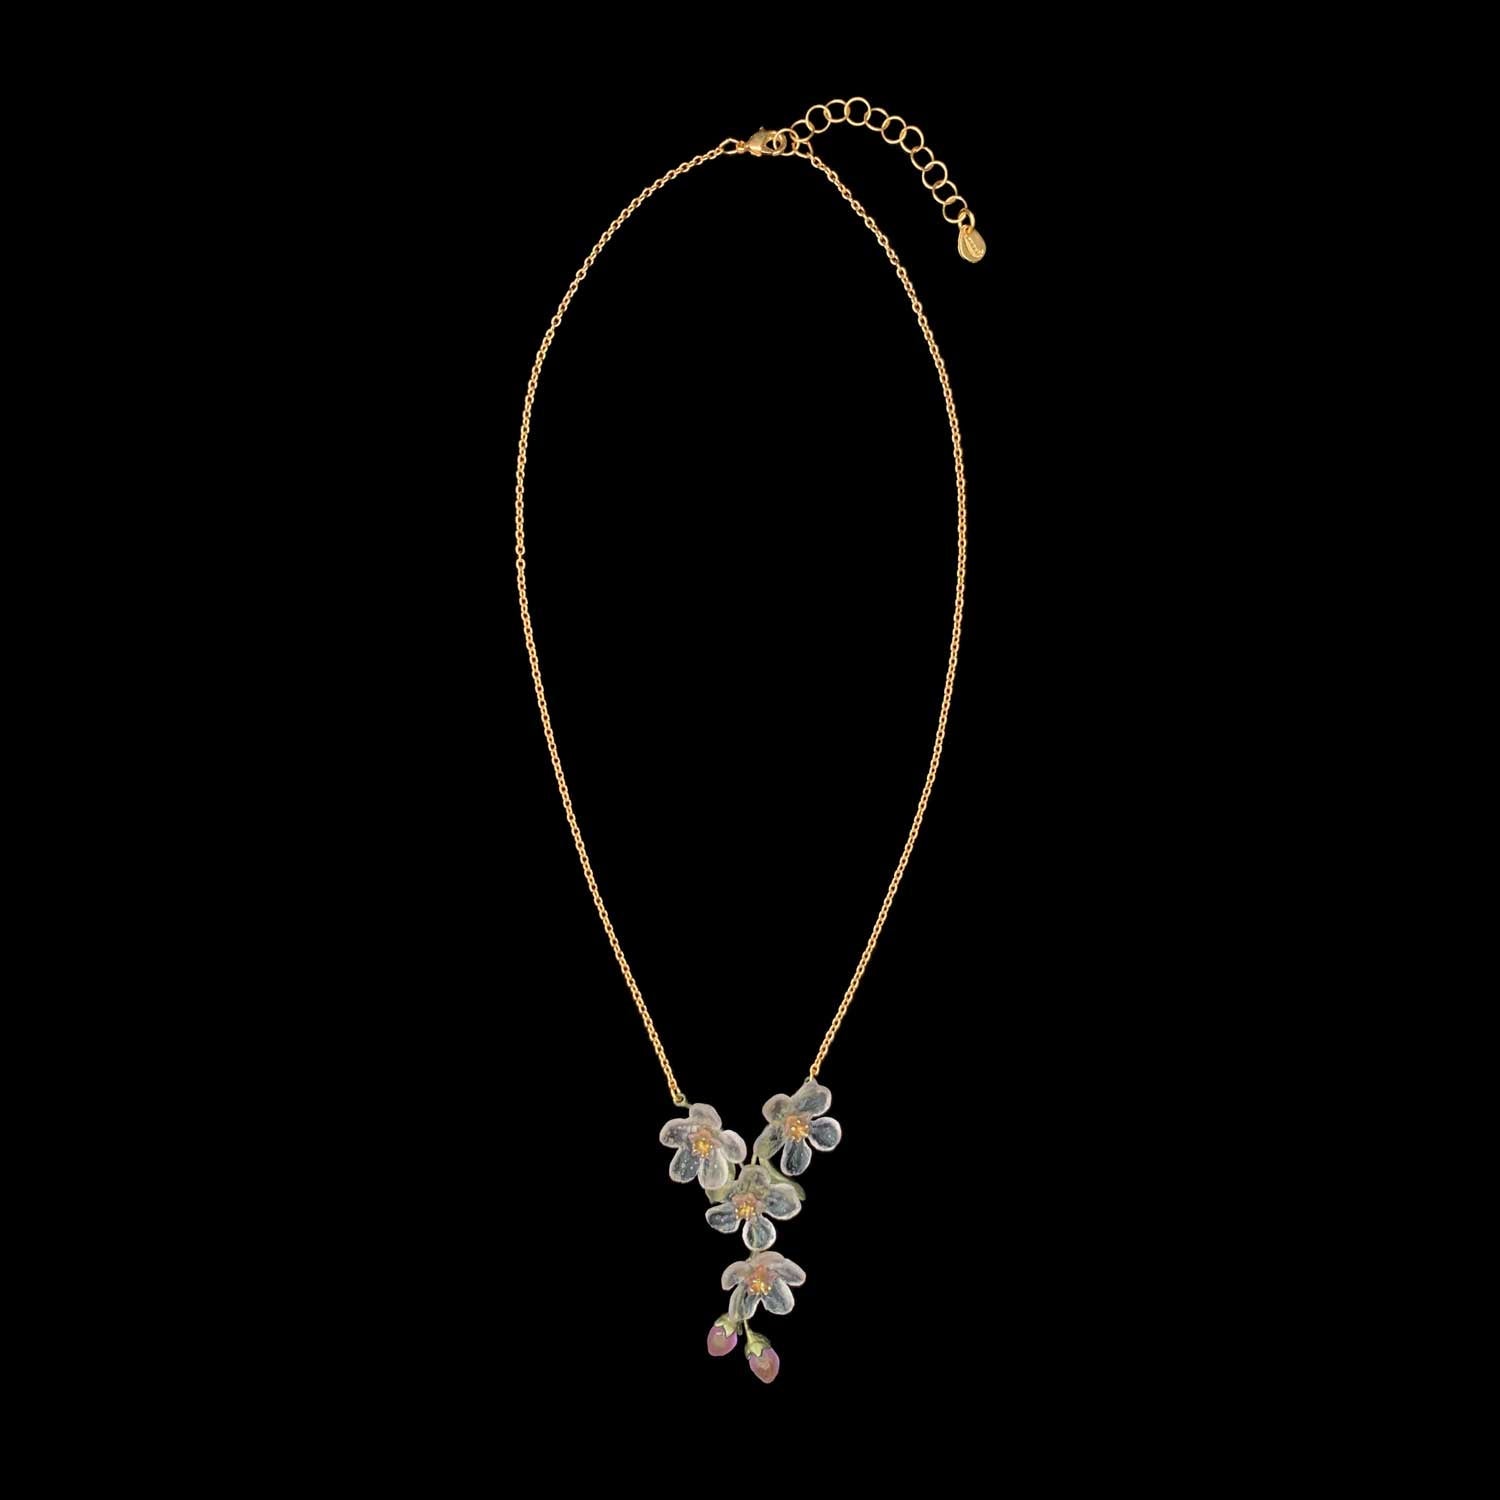 Peach Blossom Necklace - Flowers